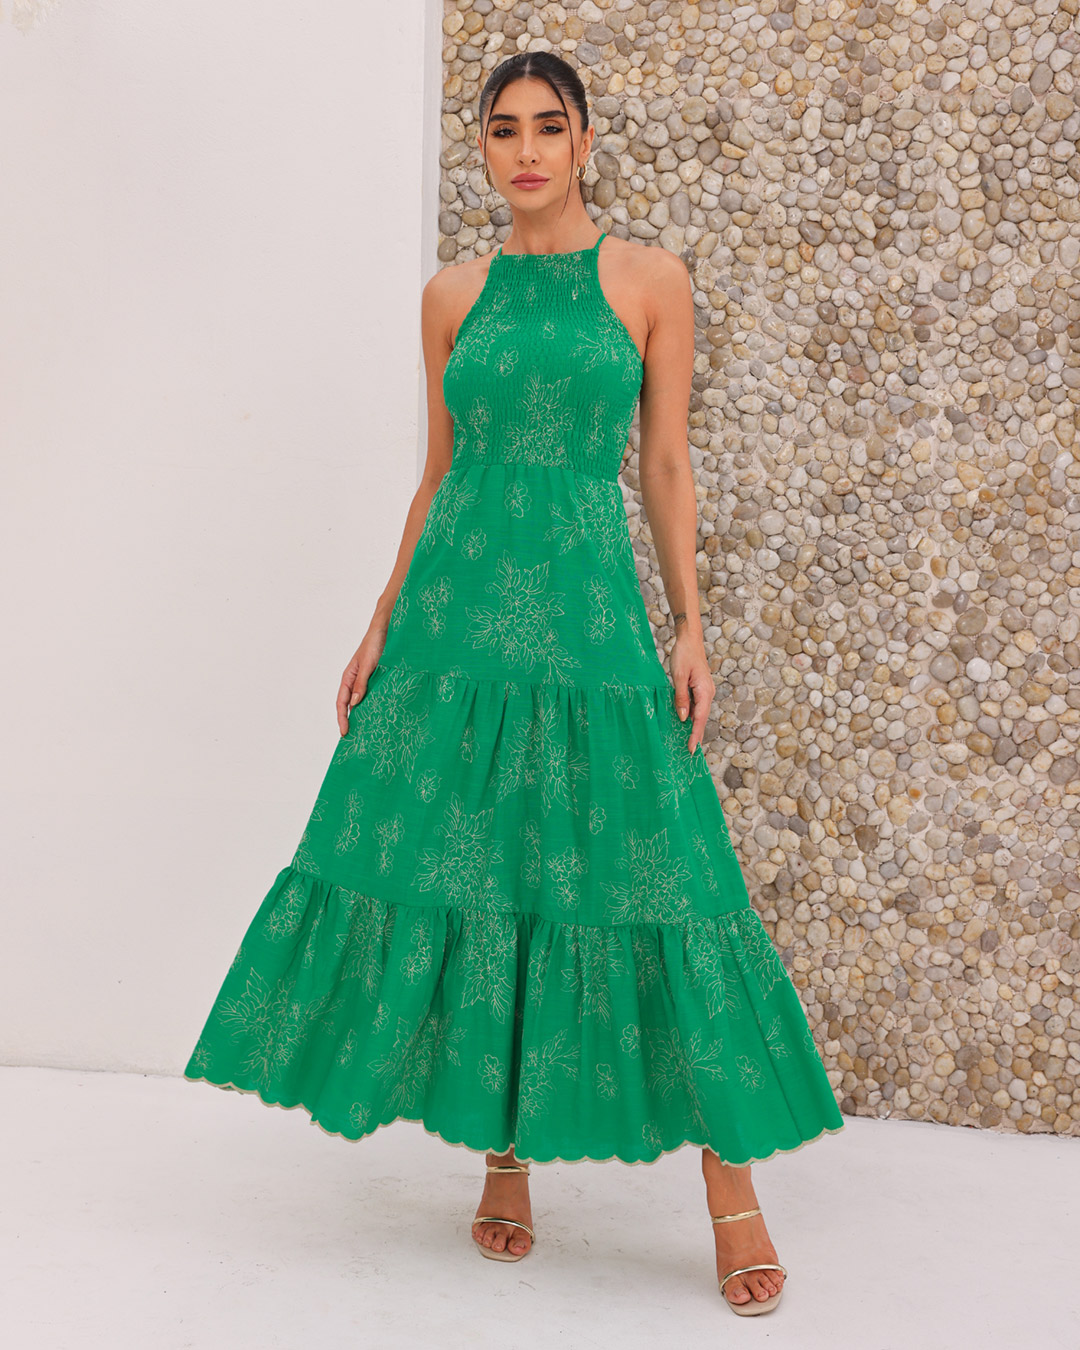 Dot Clothing - Dress Dot Clothing Longuete Laise Verde - 2160VERDE